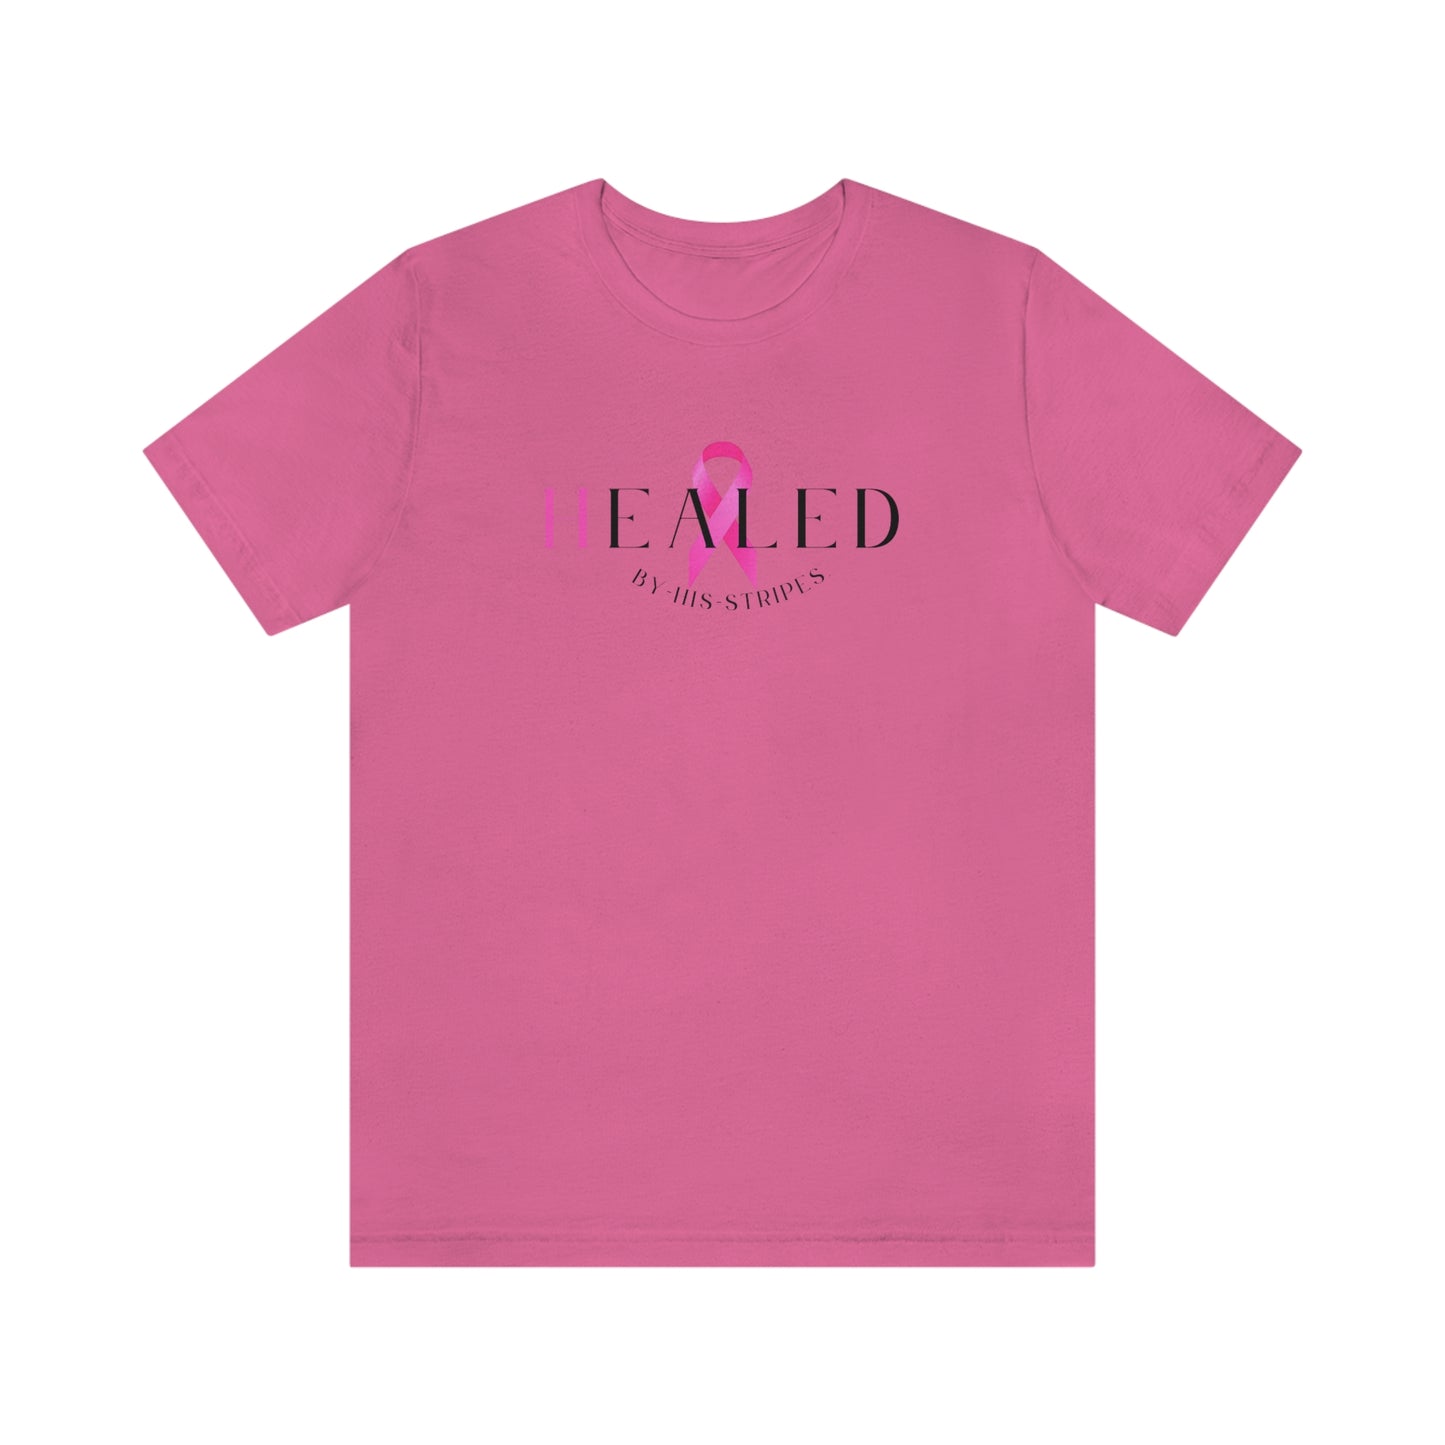 Breast Cancer Healed T-shirt